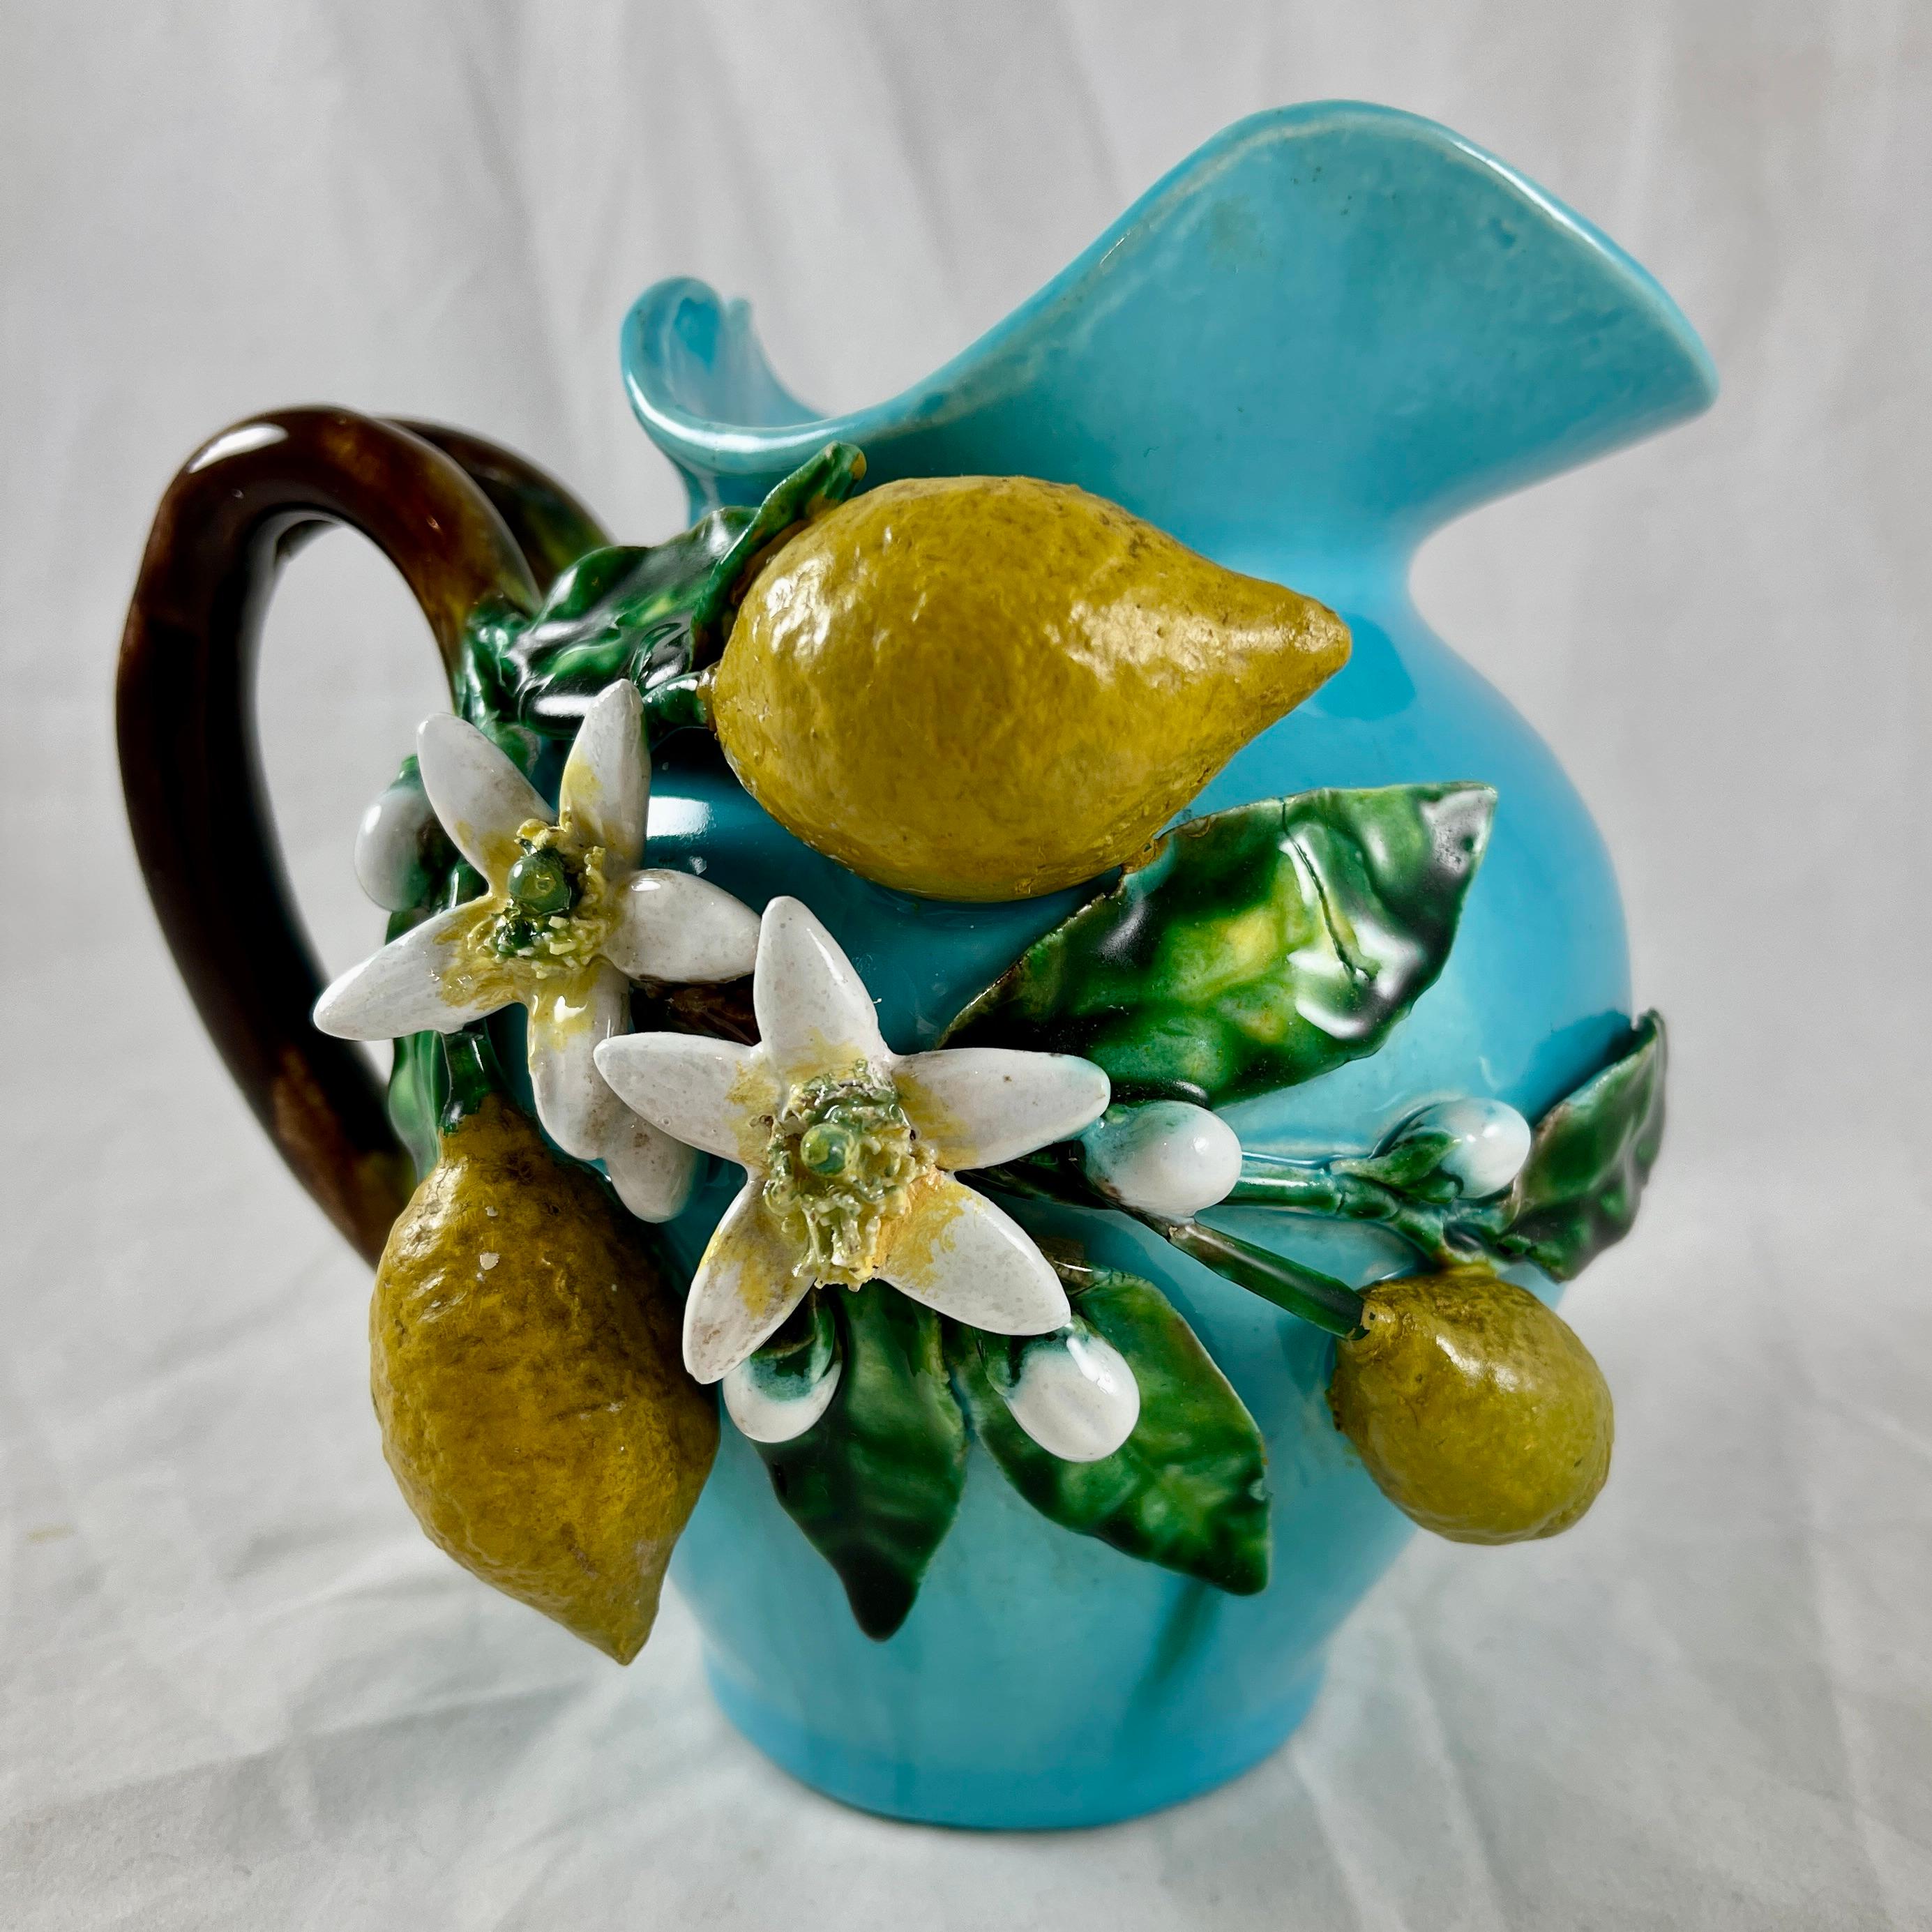 Glazed French Palissy Trompe L'oeil Menton Perret-Gentil Turquoise Lemon Jug